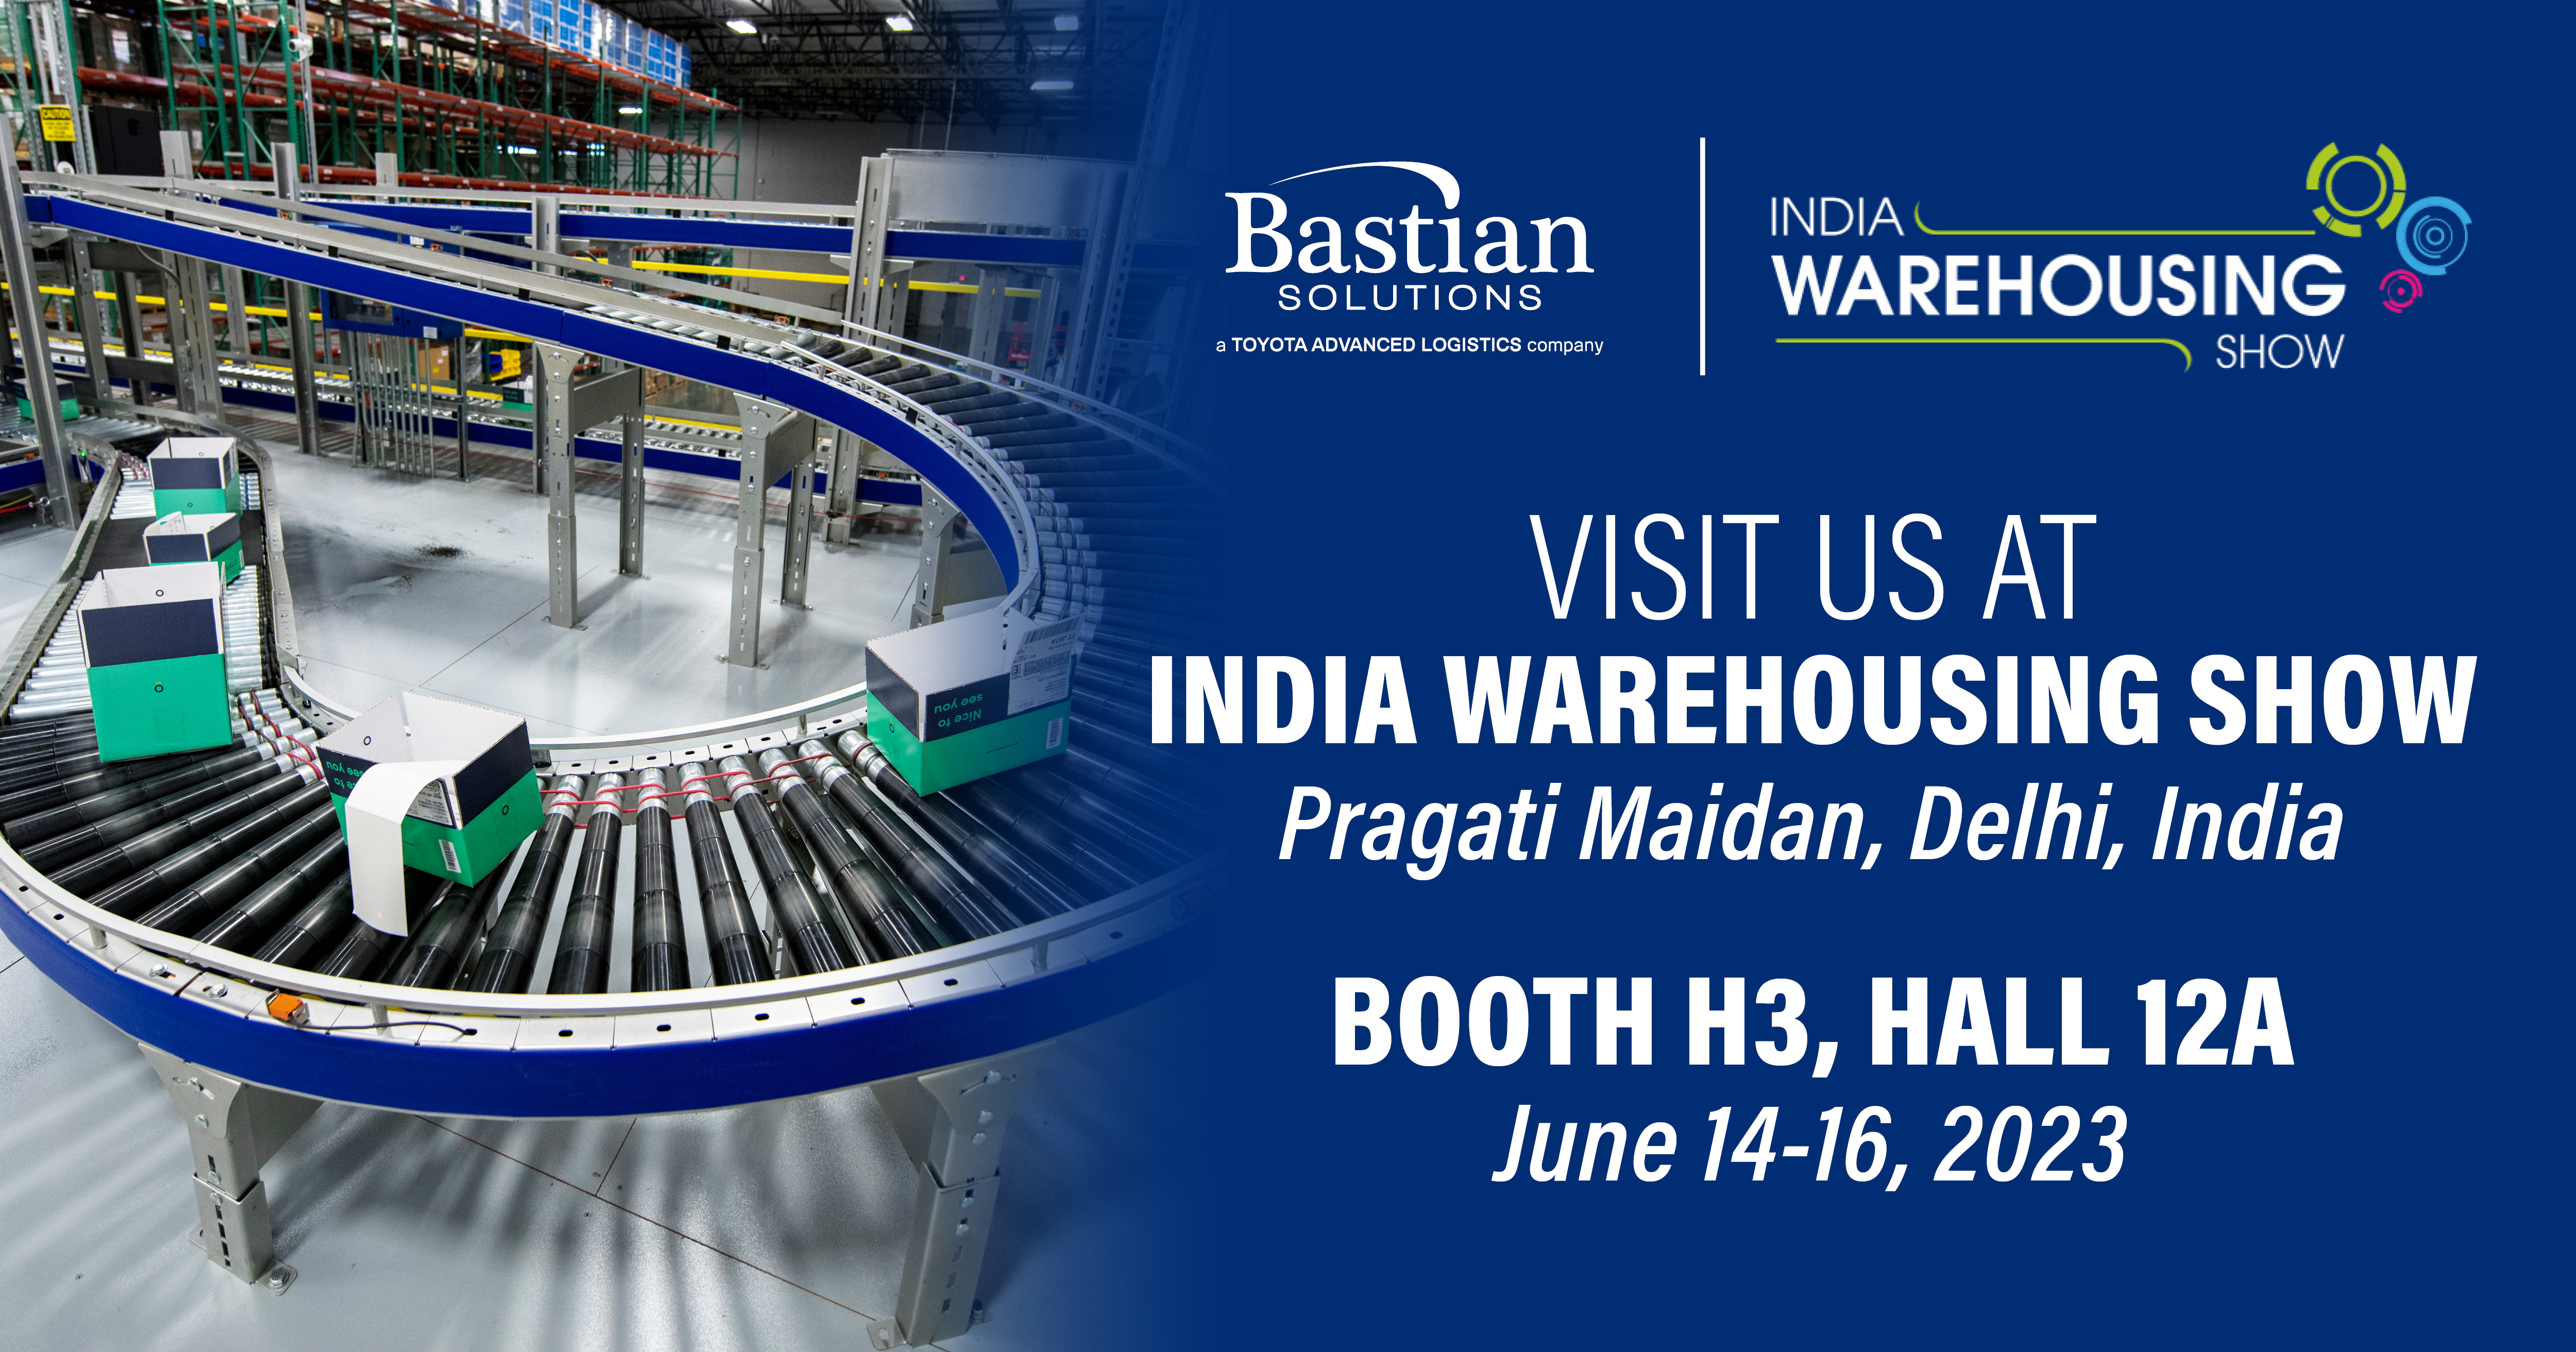 Bastian Solutions to Showcase Next-Gen Warehousing Technologies at the India Warehousing Show 2023